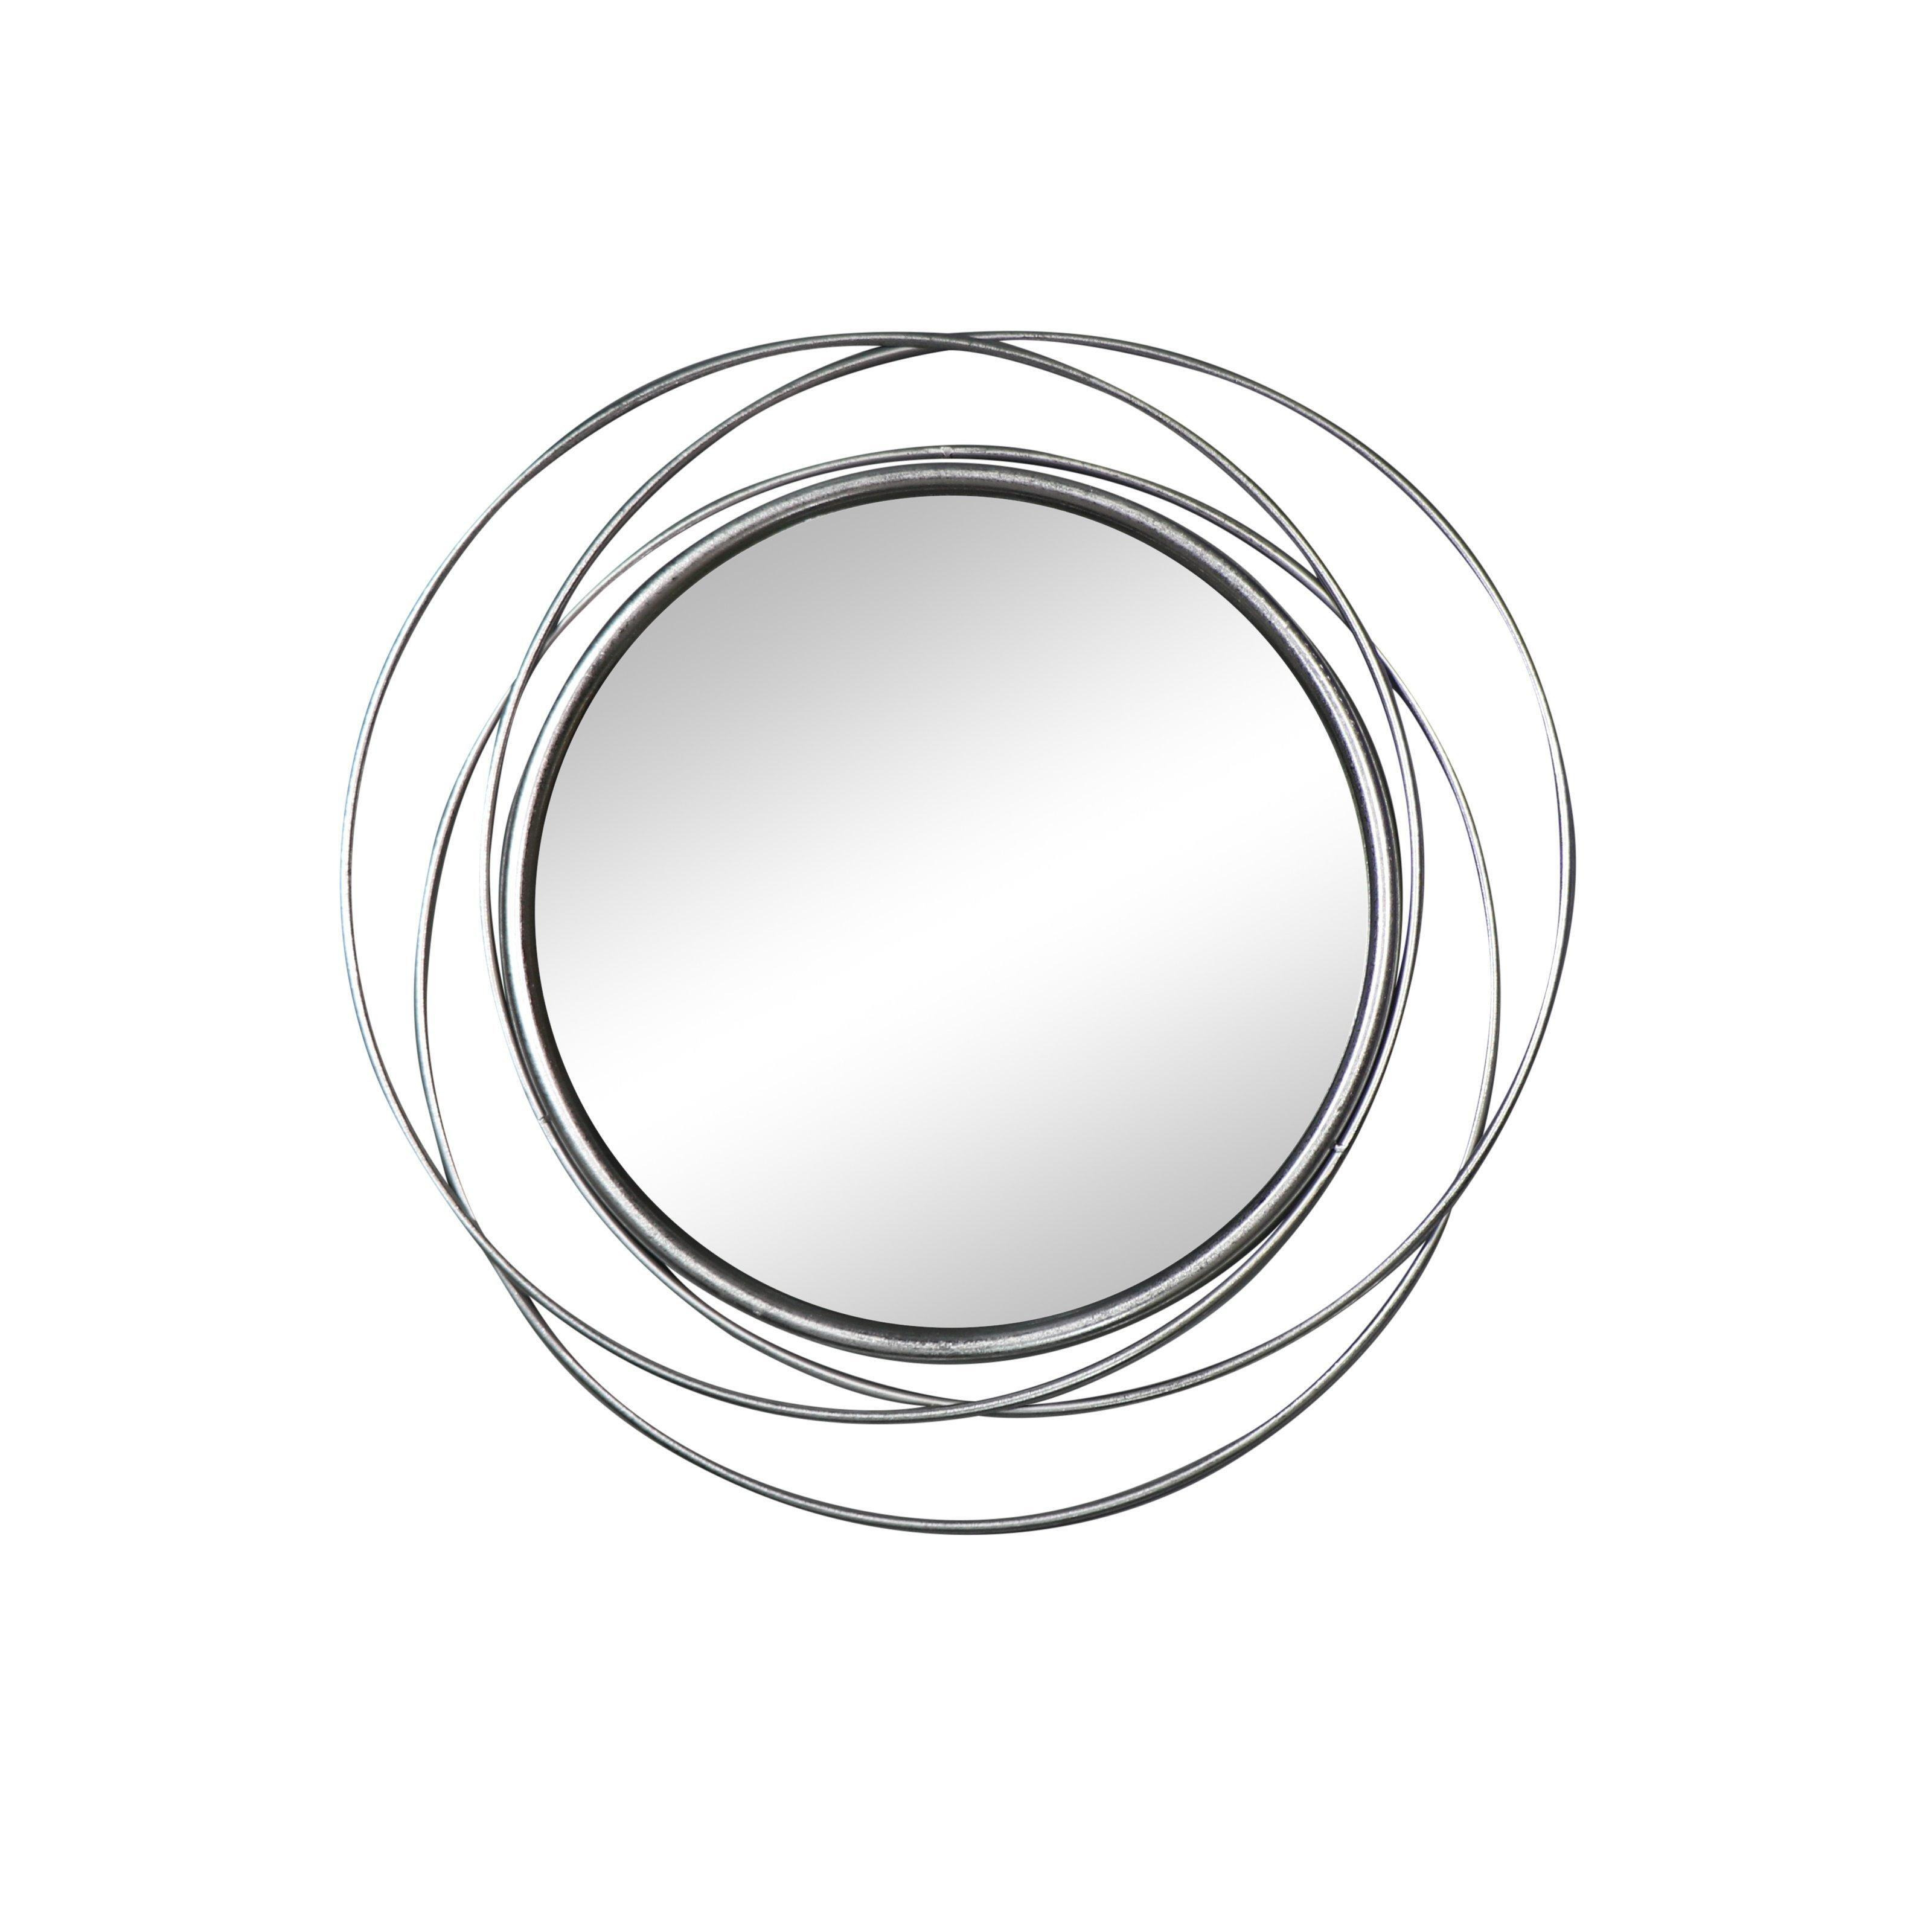 Large Round Antique Silver Swirl Mirror 80cm X 80cm - image 1